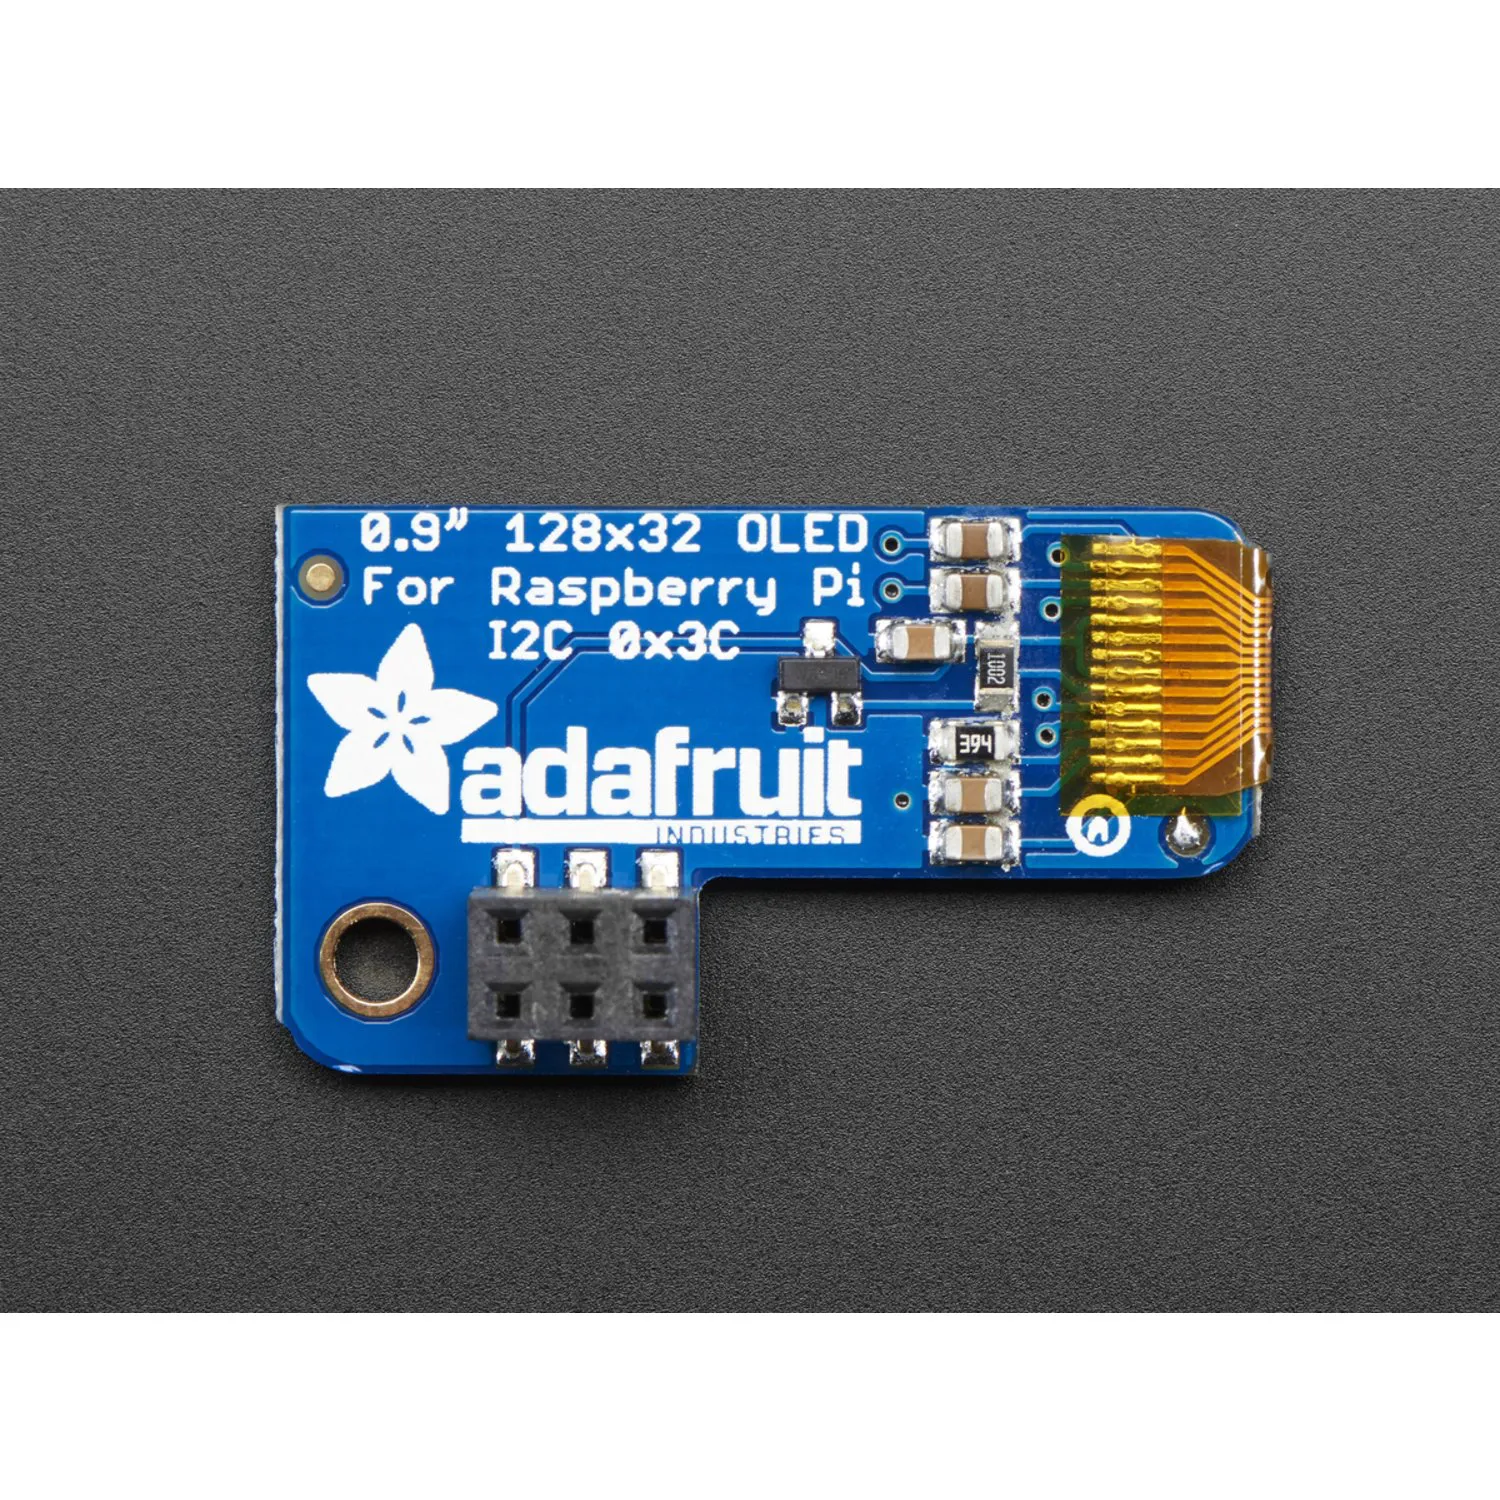 Photo of Adafruit PiOLED - 128x32 Monochrome OLED Add-on for Raspberry Pi